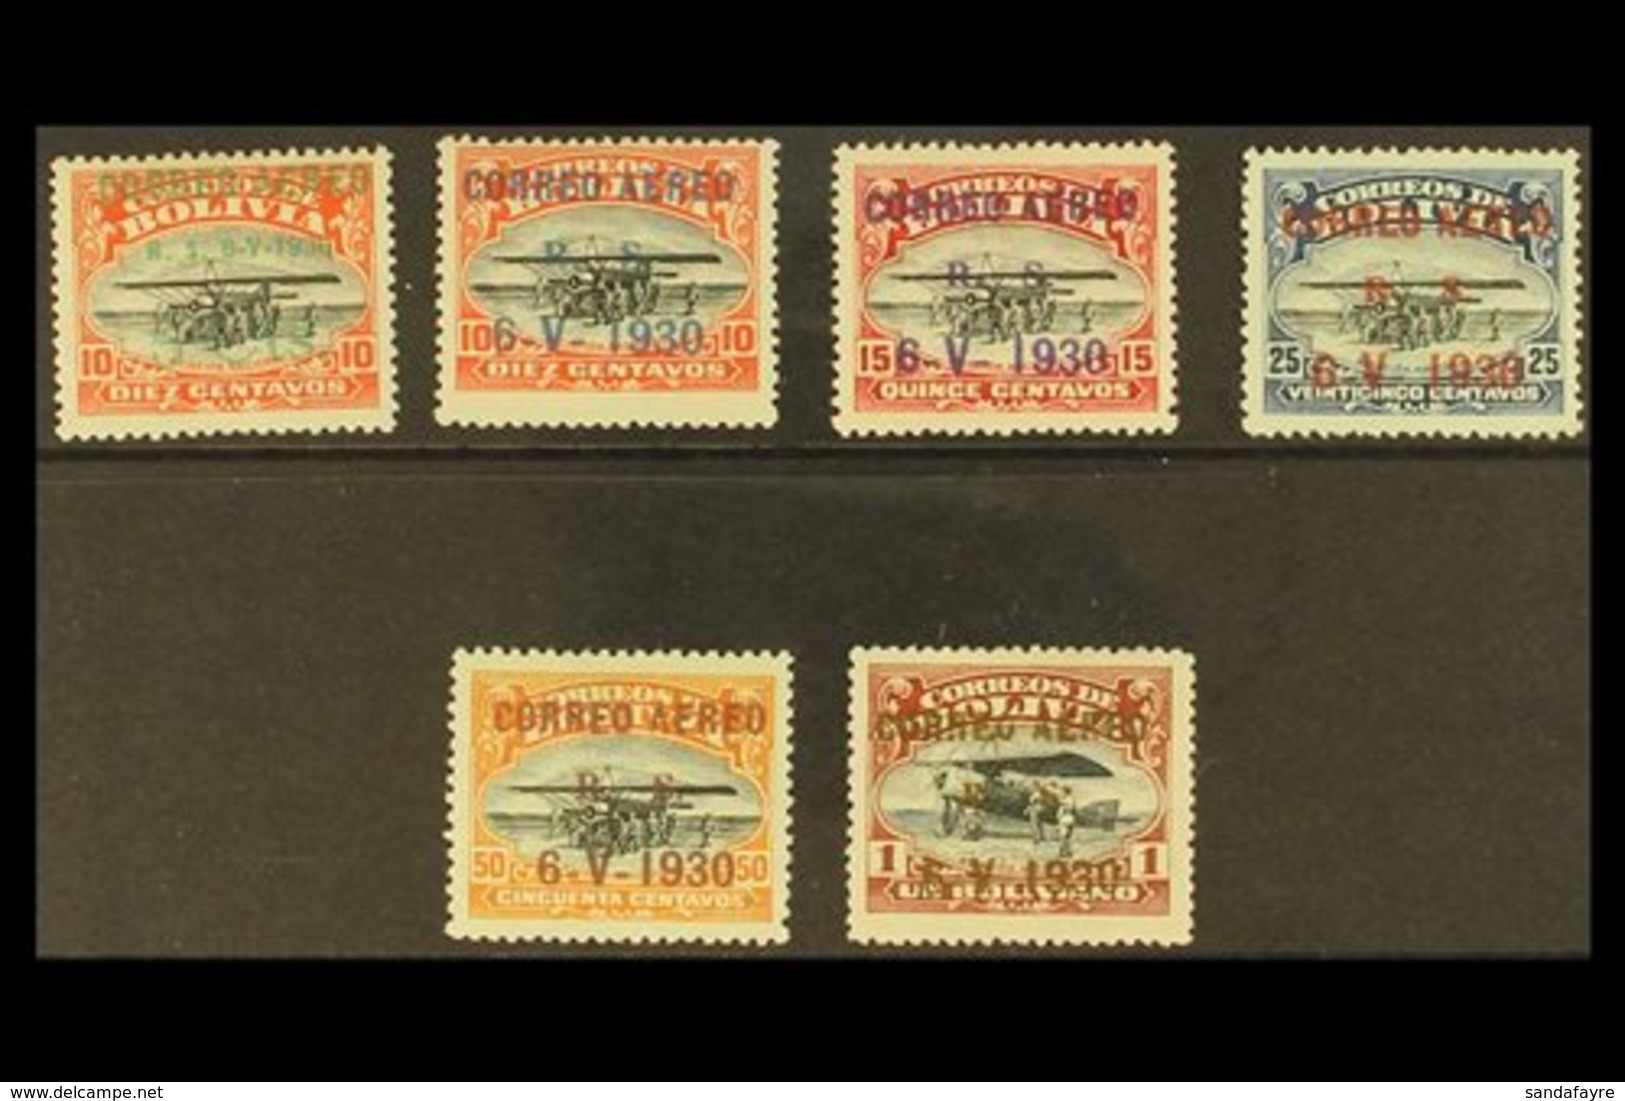 \Y 1930\Y Air "CORREO AEREO" Overprints Complete Basic Set (SG 228/35, Scott C11/12, C14/16 & C18), Very Fine Mint, Very - Bolivia